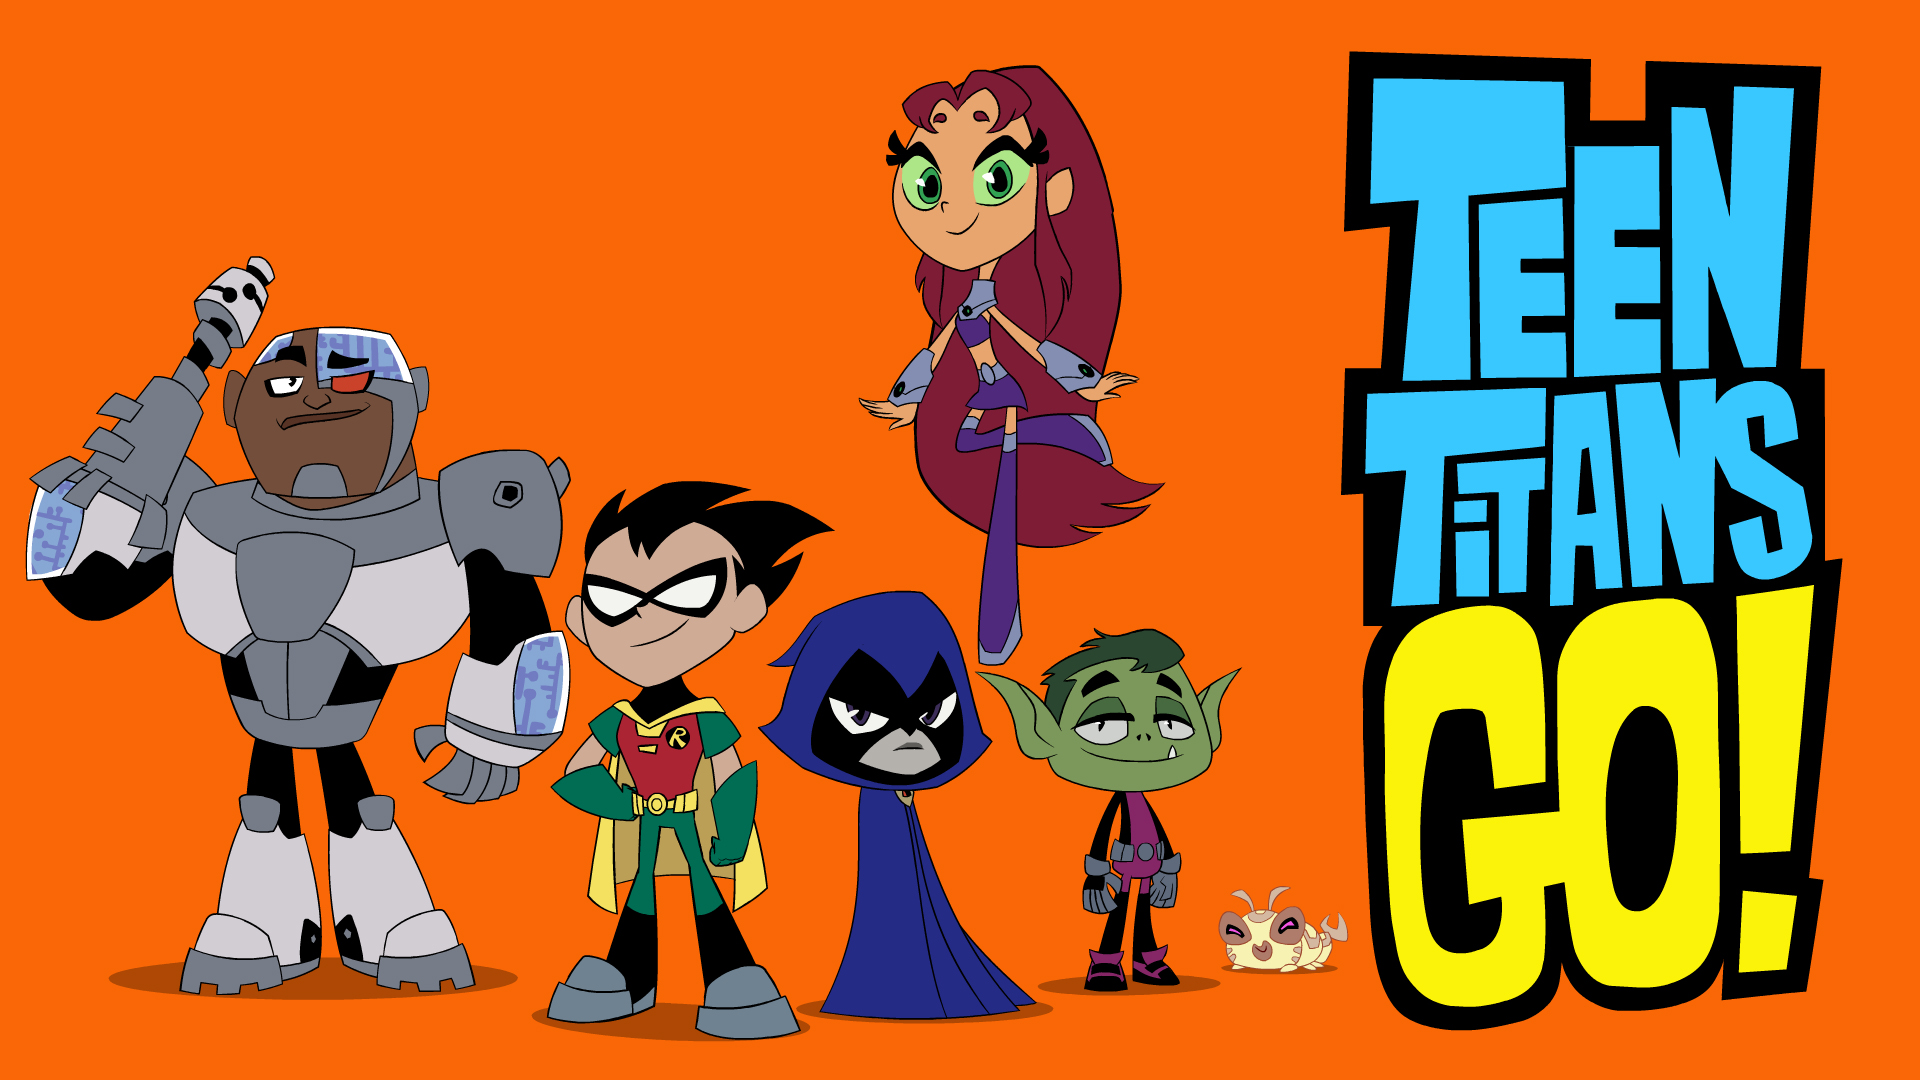 Teen Titans Go! trên Cartoon Network | VTVcab - VietNam Television Cable